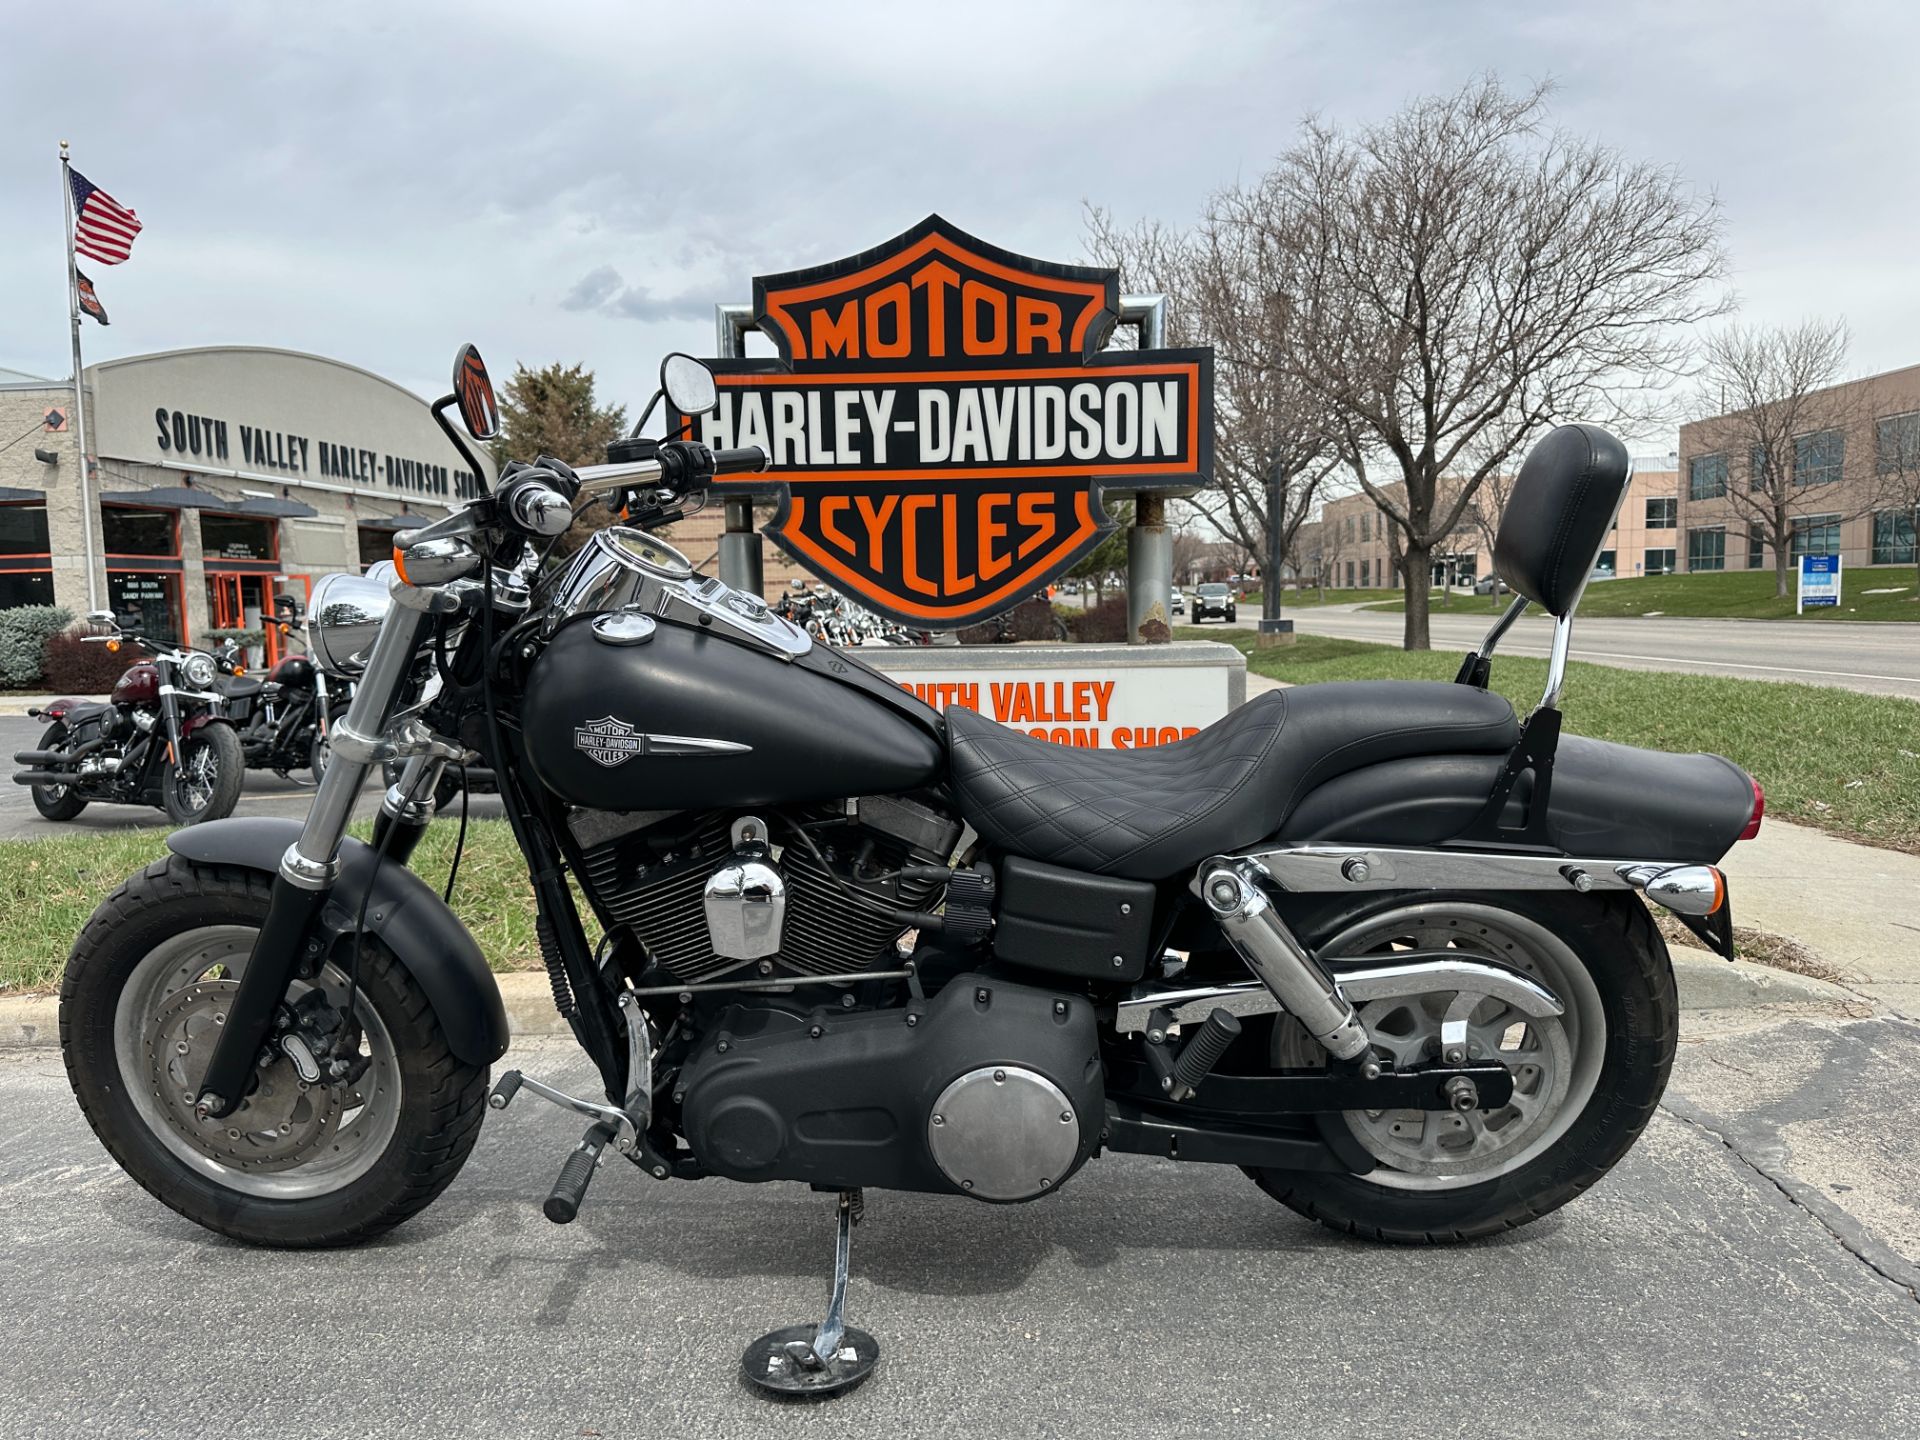 2010 Harley-Davidson Dyna® Fat Bob® in Sandy, Utah - Photo 11